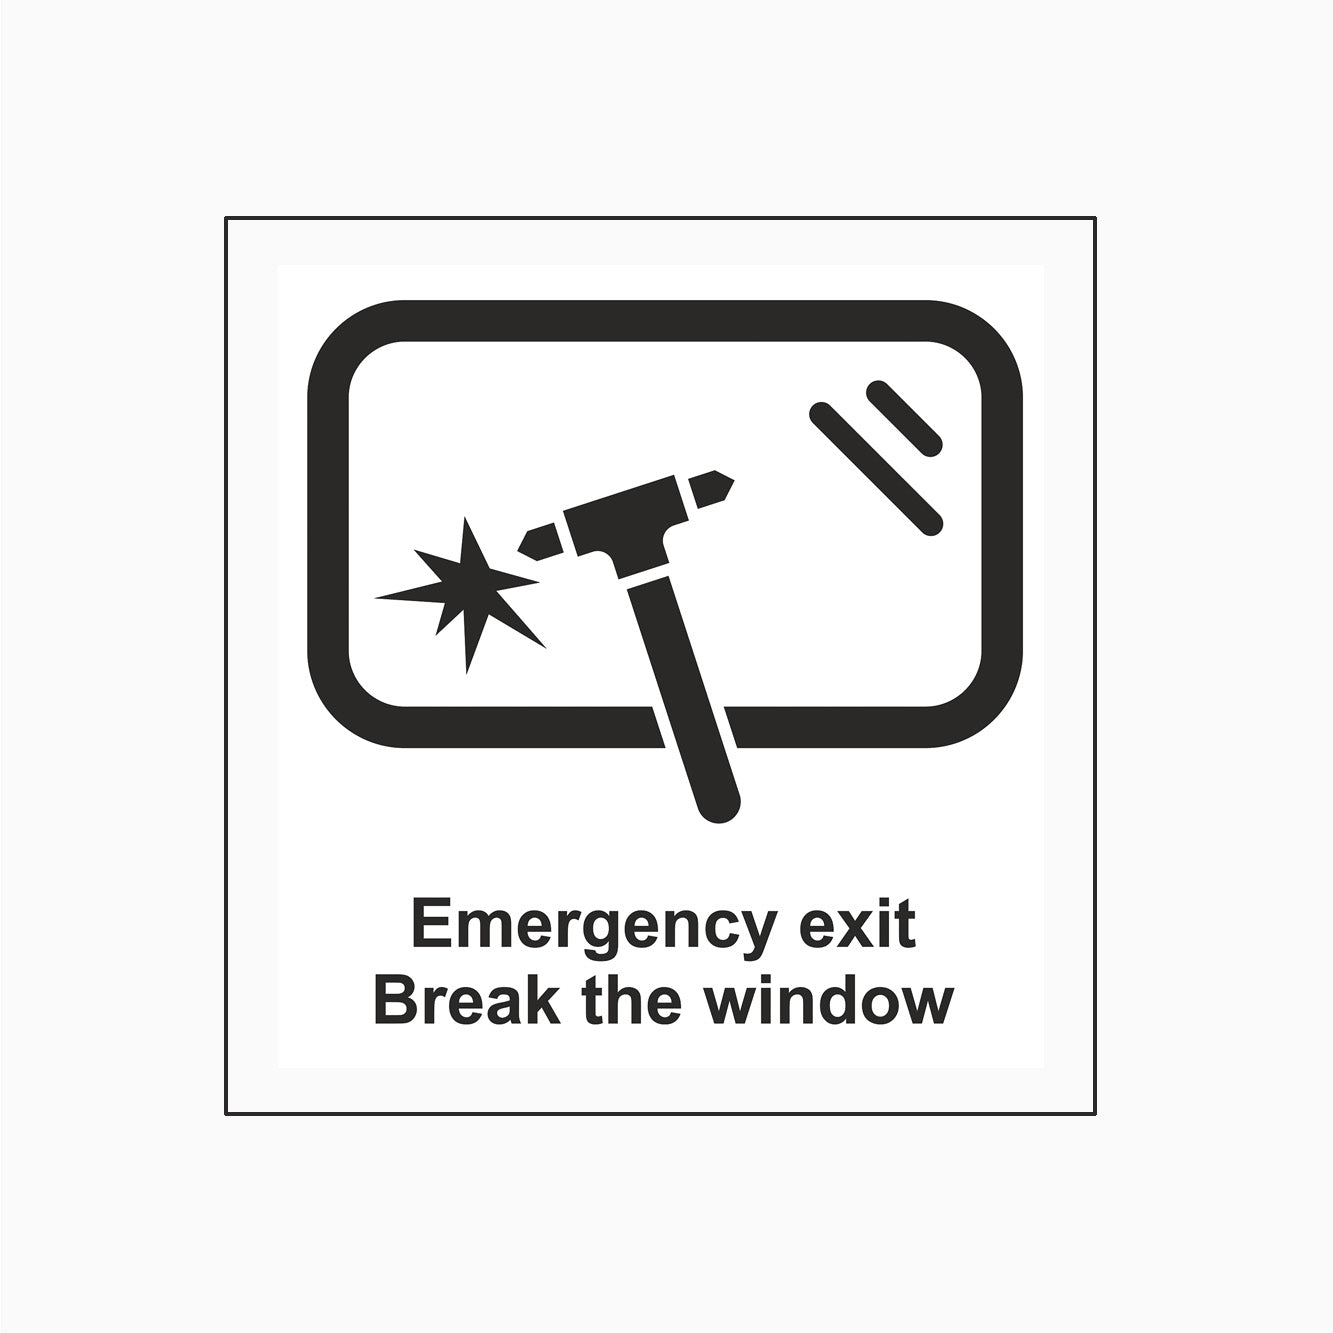 EMERGENCY EXIT BREAK THE WINDOW SIGN